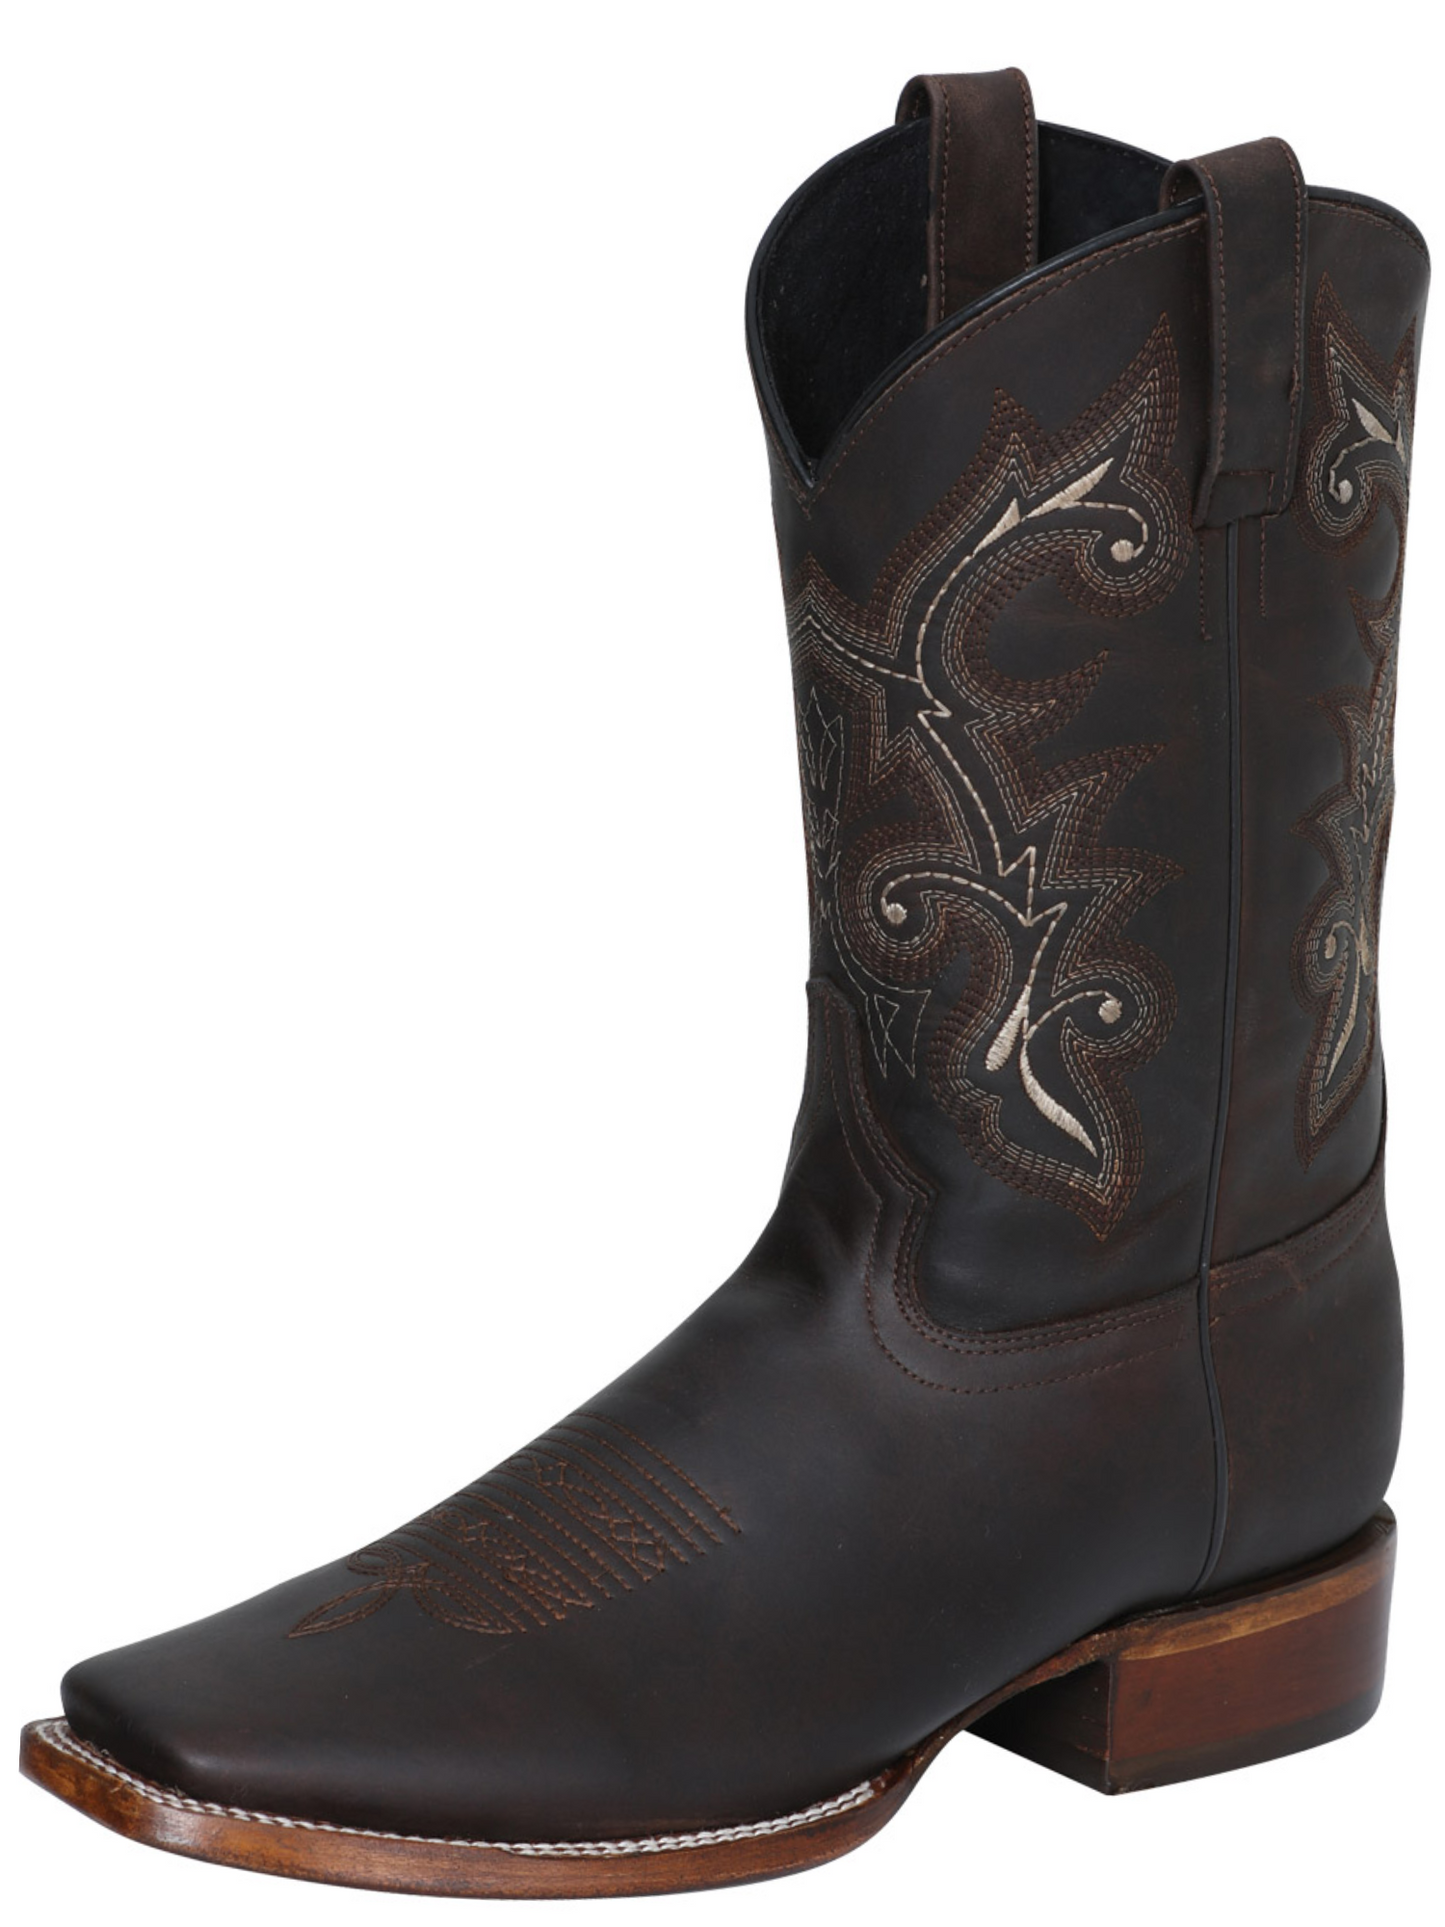 Classic Genuine Leather Rodeo Cowboy Boots for Men 'El Señor de los Cielos' - ID: 124067 Cowboy Boots El Señor de los Cielos Choco